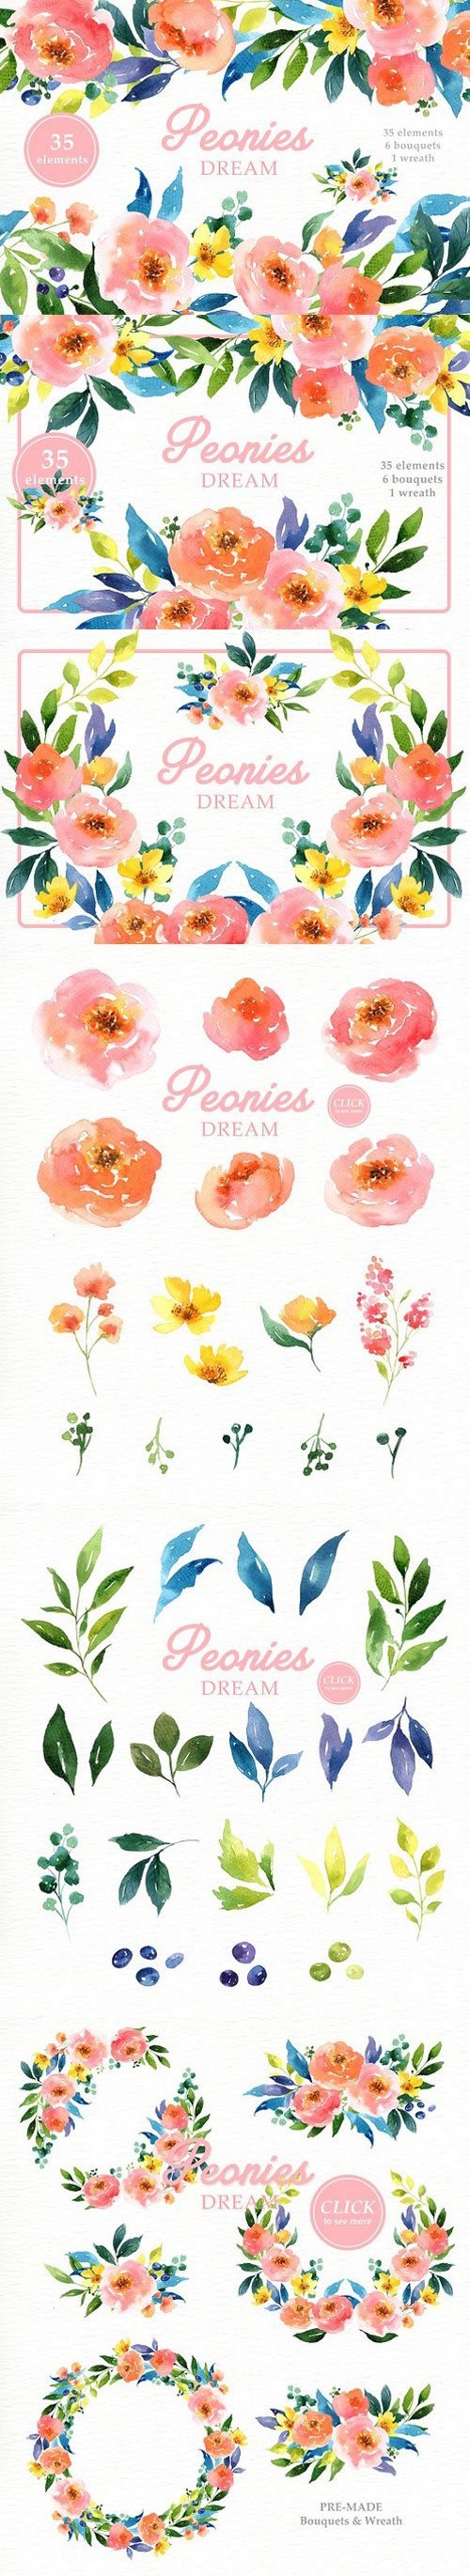 Peonies Dream Watercolor Clipart 1562528